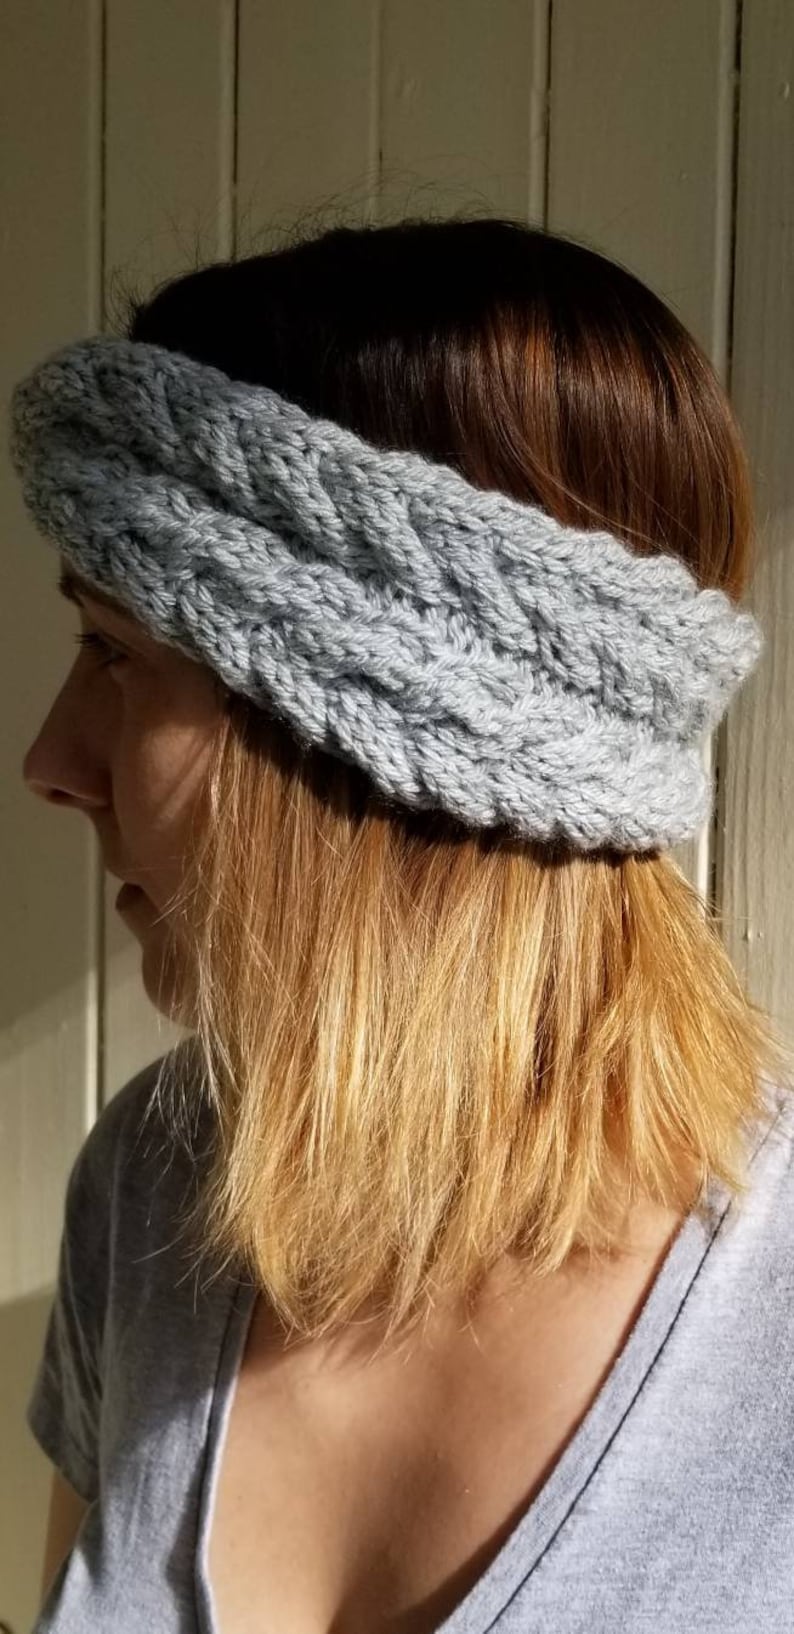 La Frileuse: Neon peach winter headband in hand-braided knit image 7